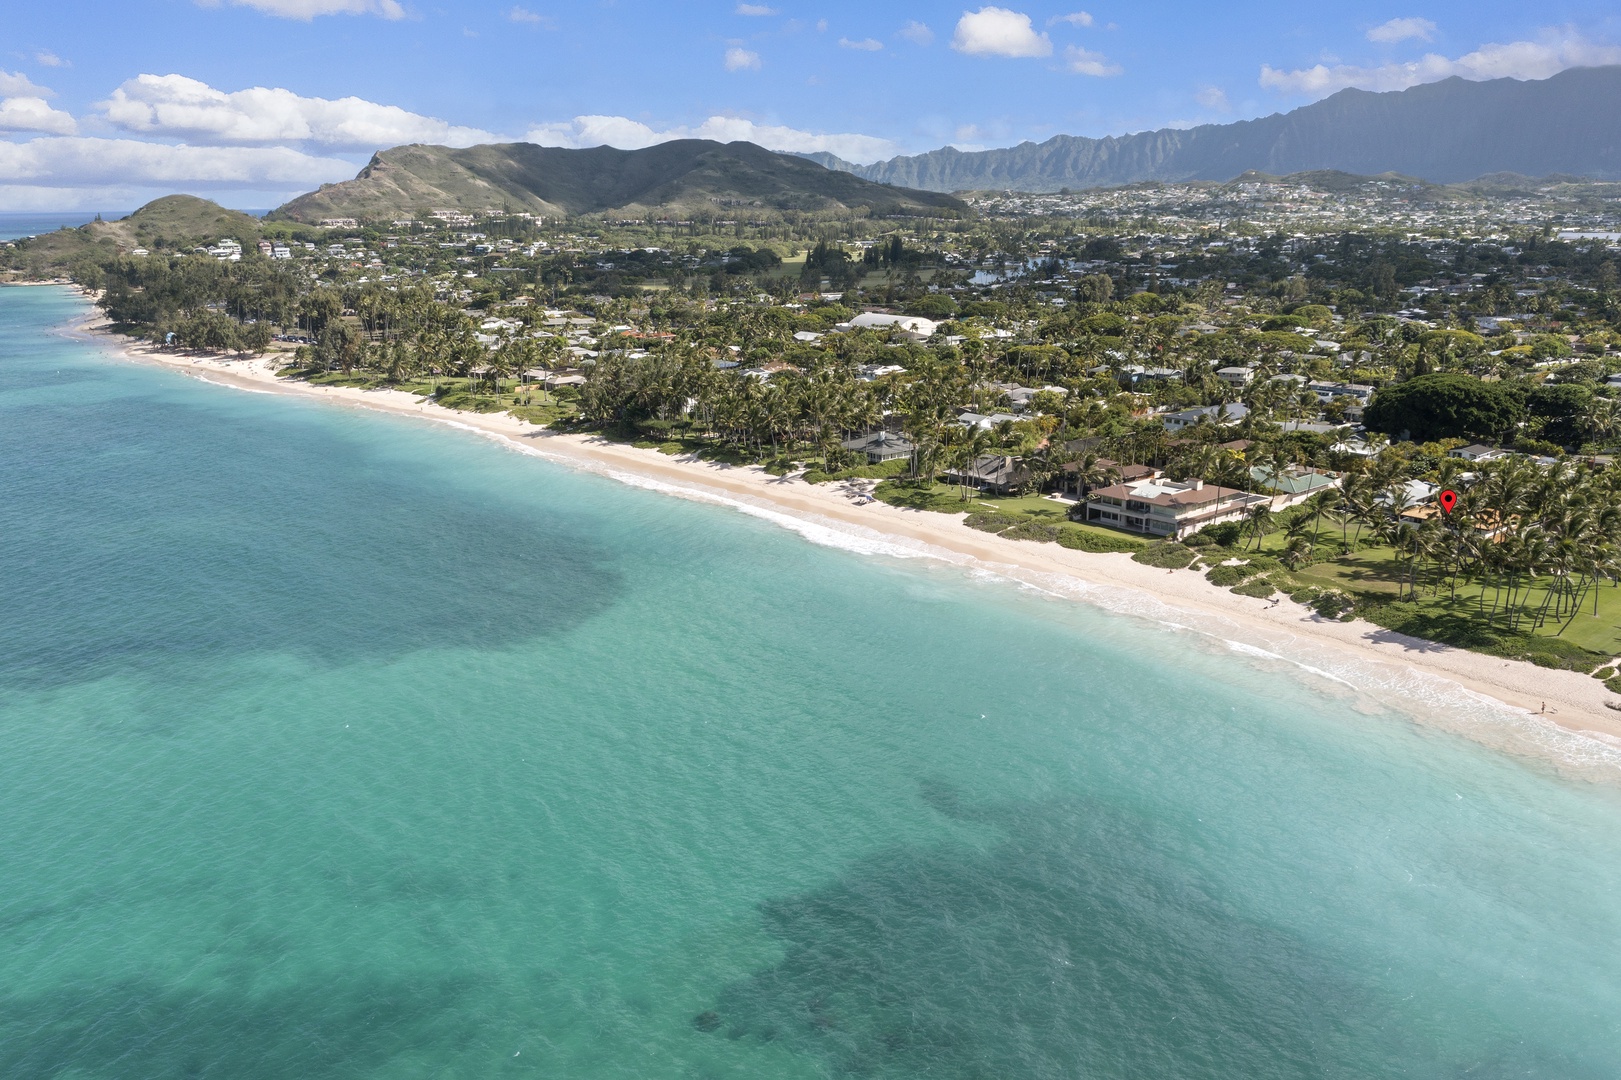 Kailua Vacation Rentals, Kailua Hale Kahakai - Miles of gorgeous aqua oceans await